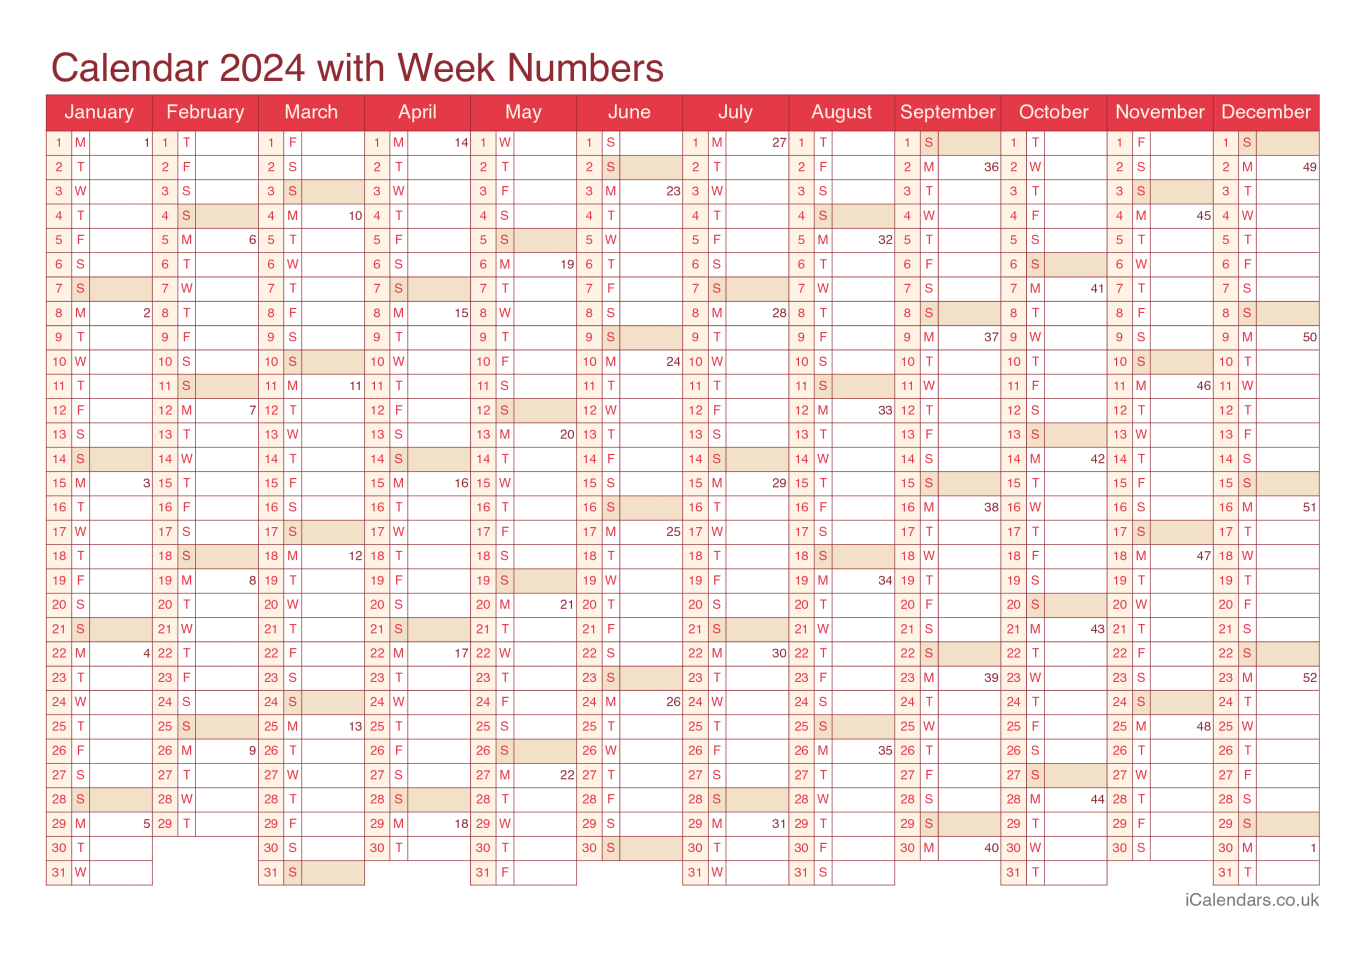 Calendar 2024 with week numbers - Cherry